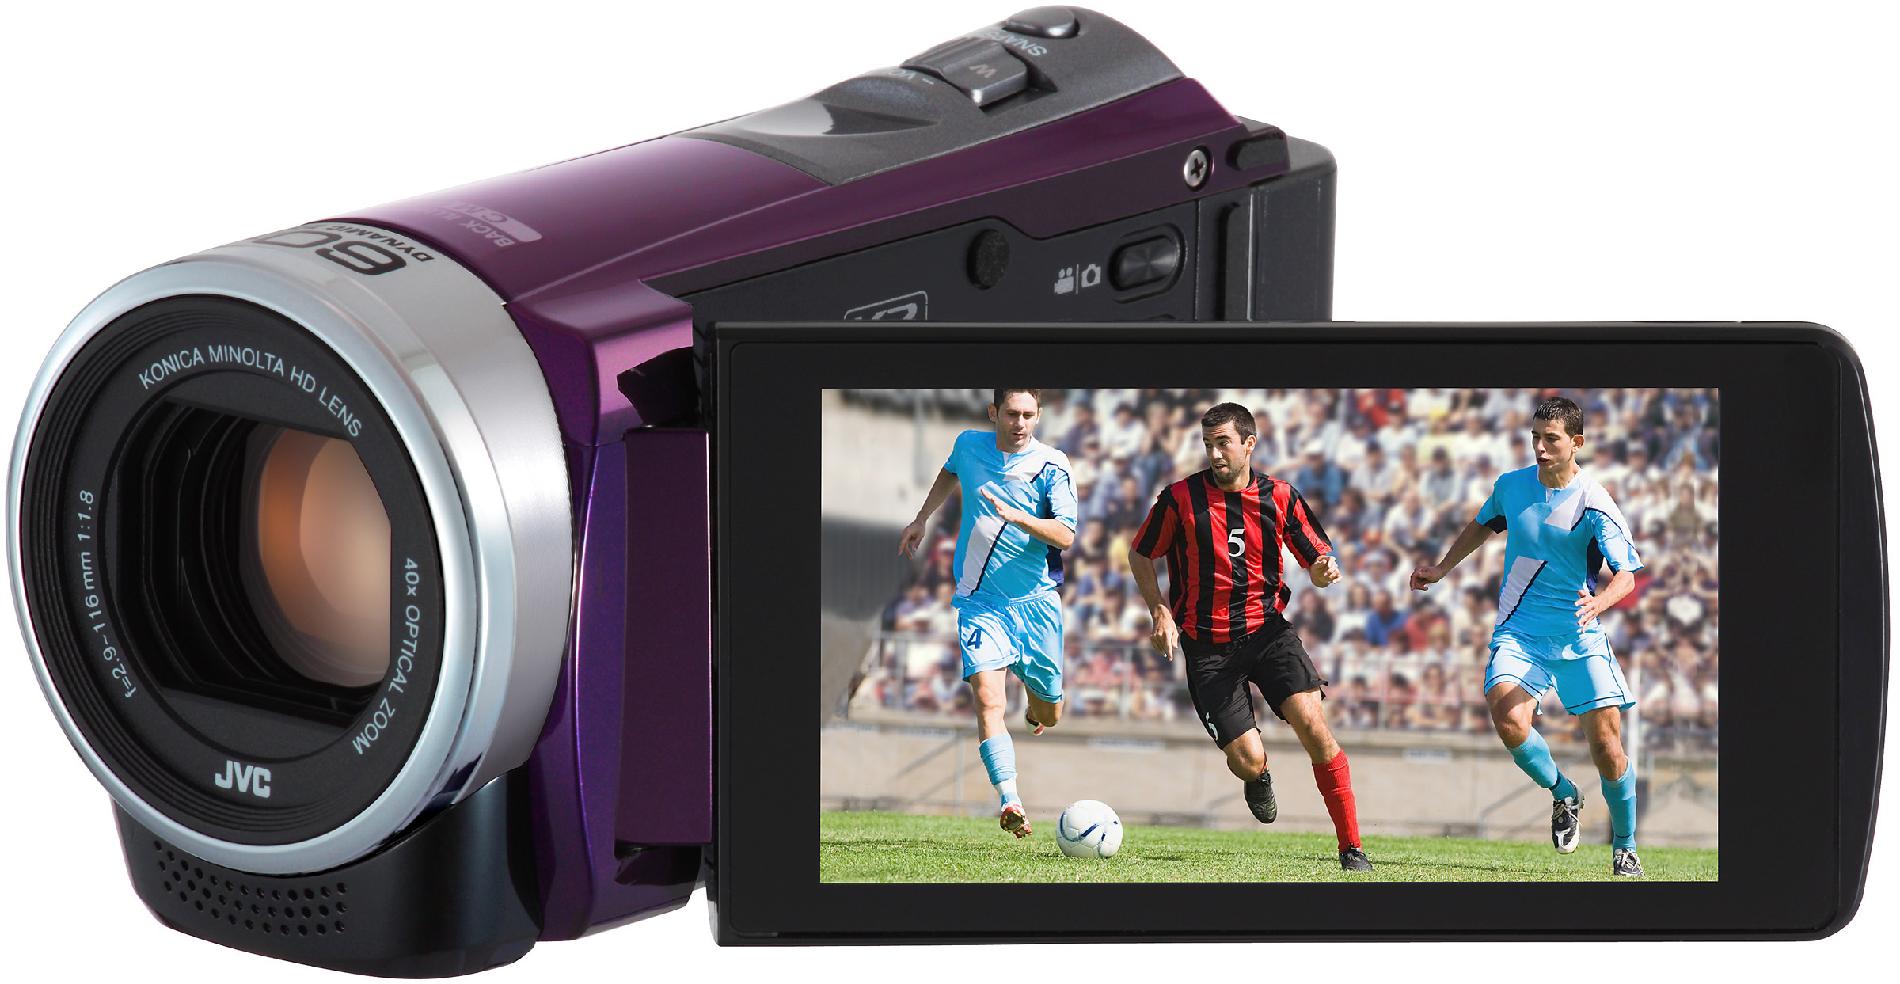 GZEX310V HD Flash Memory Digital Camcorder with 40x Optical Zoom - Purple (Refurbished)